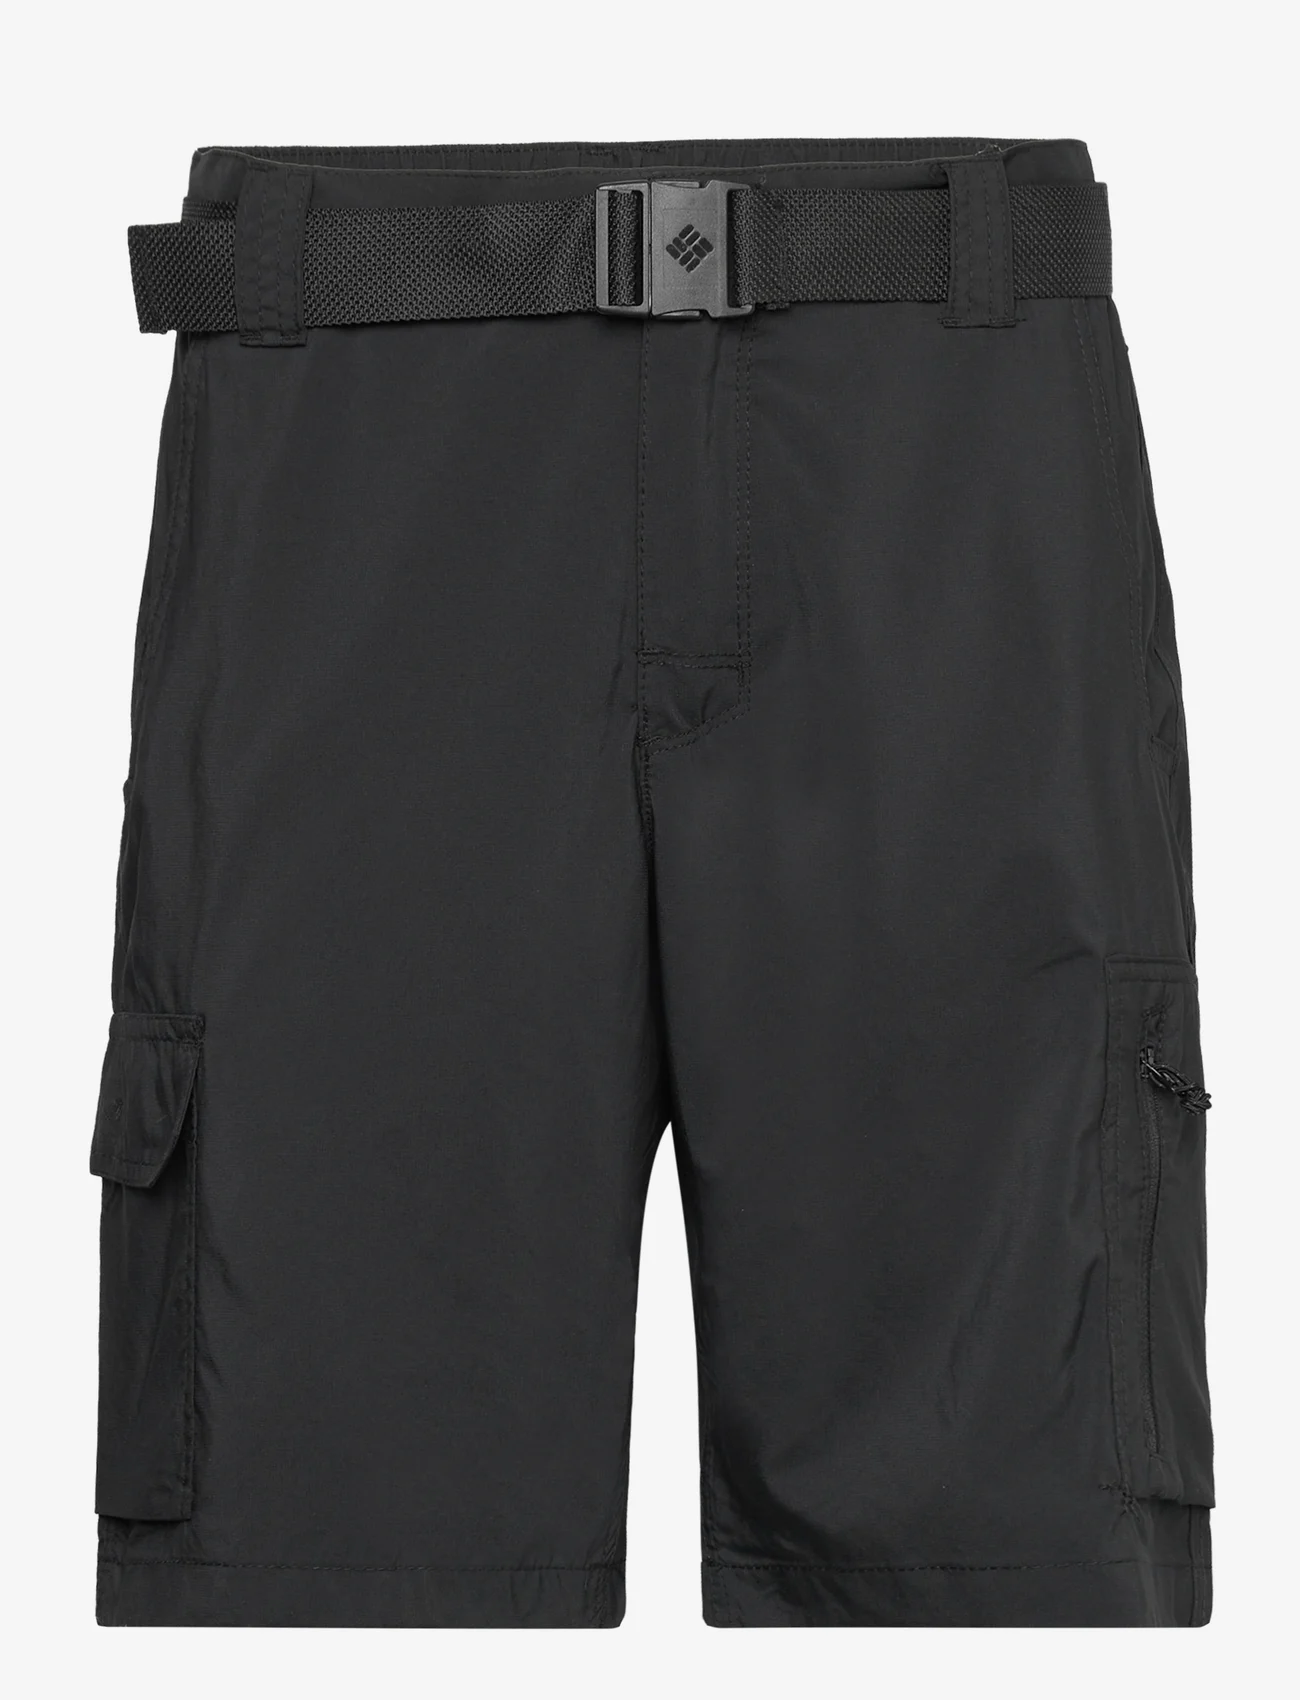 Columbia Sportswear - Silver Ridge Utility Cargo Short - lauko šortai - black - 0